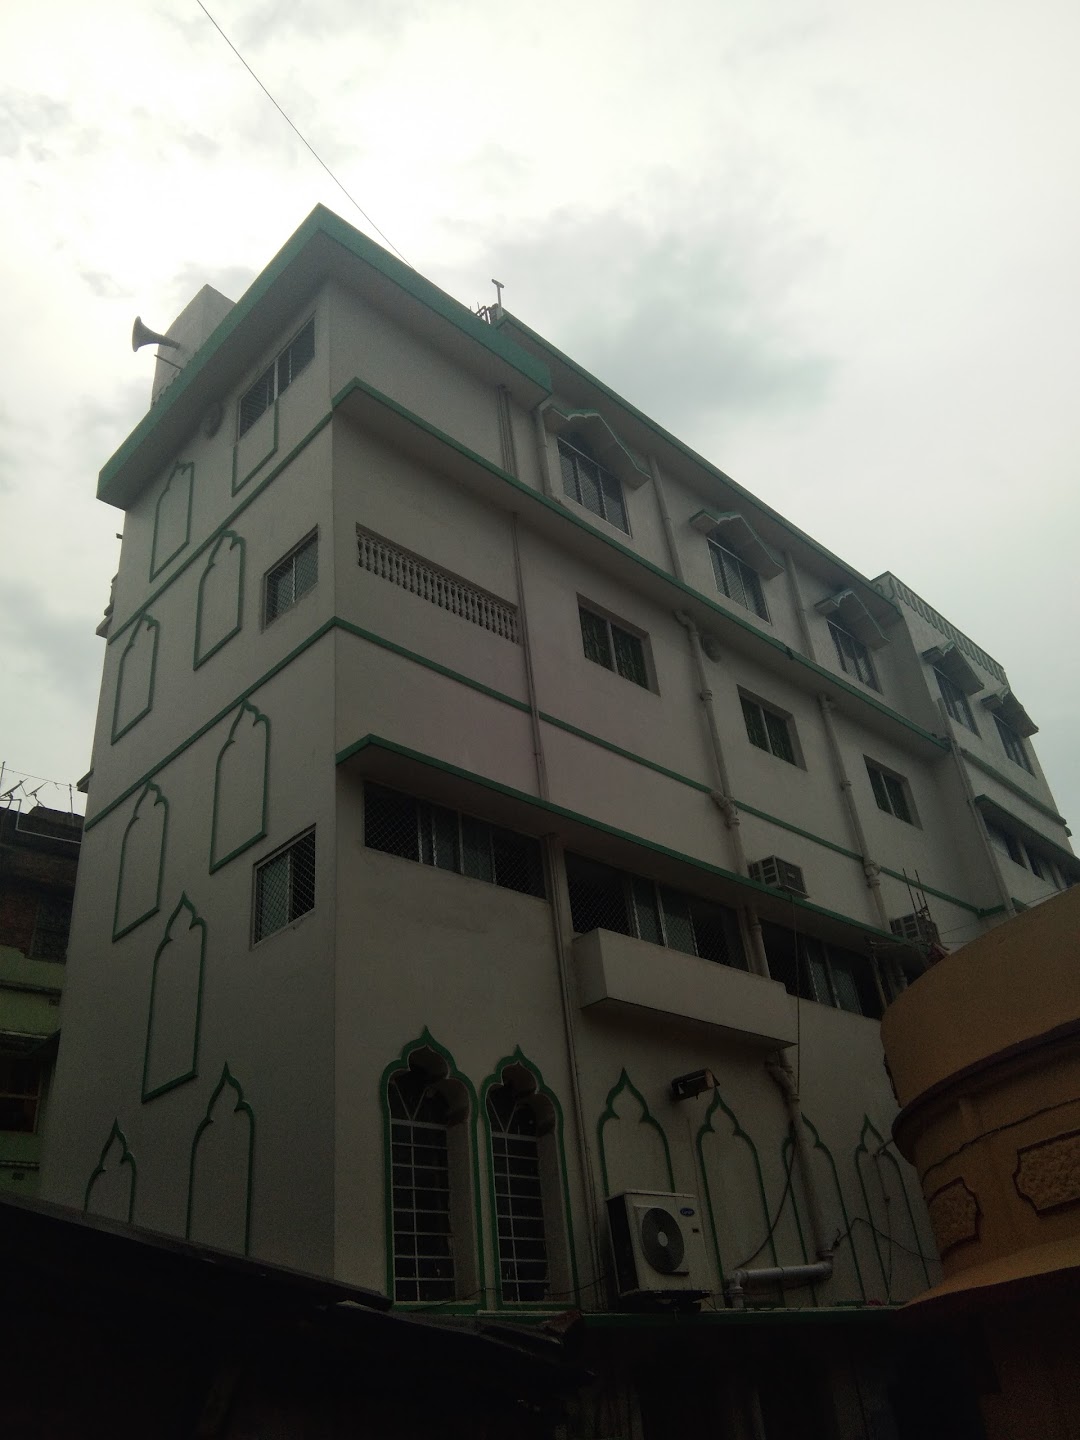 Majher Para Masjid মাঝেরপাড়া মসজিদ